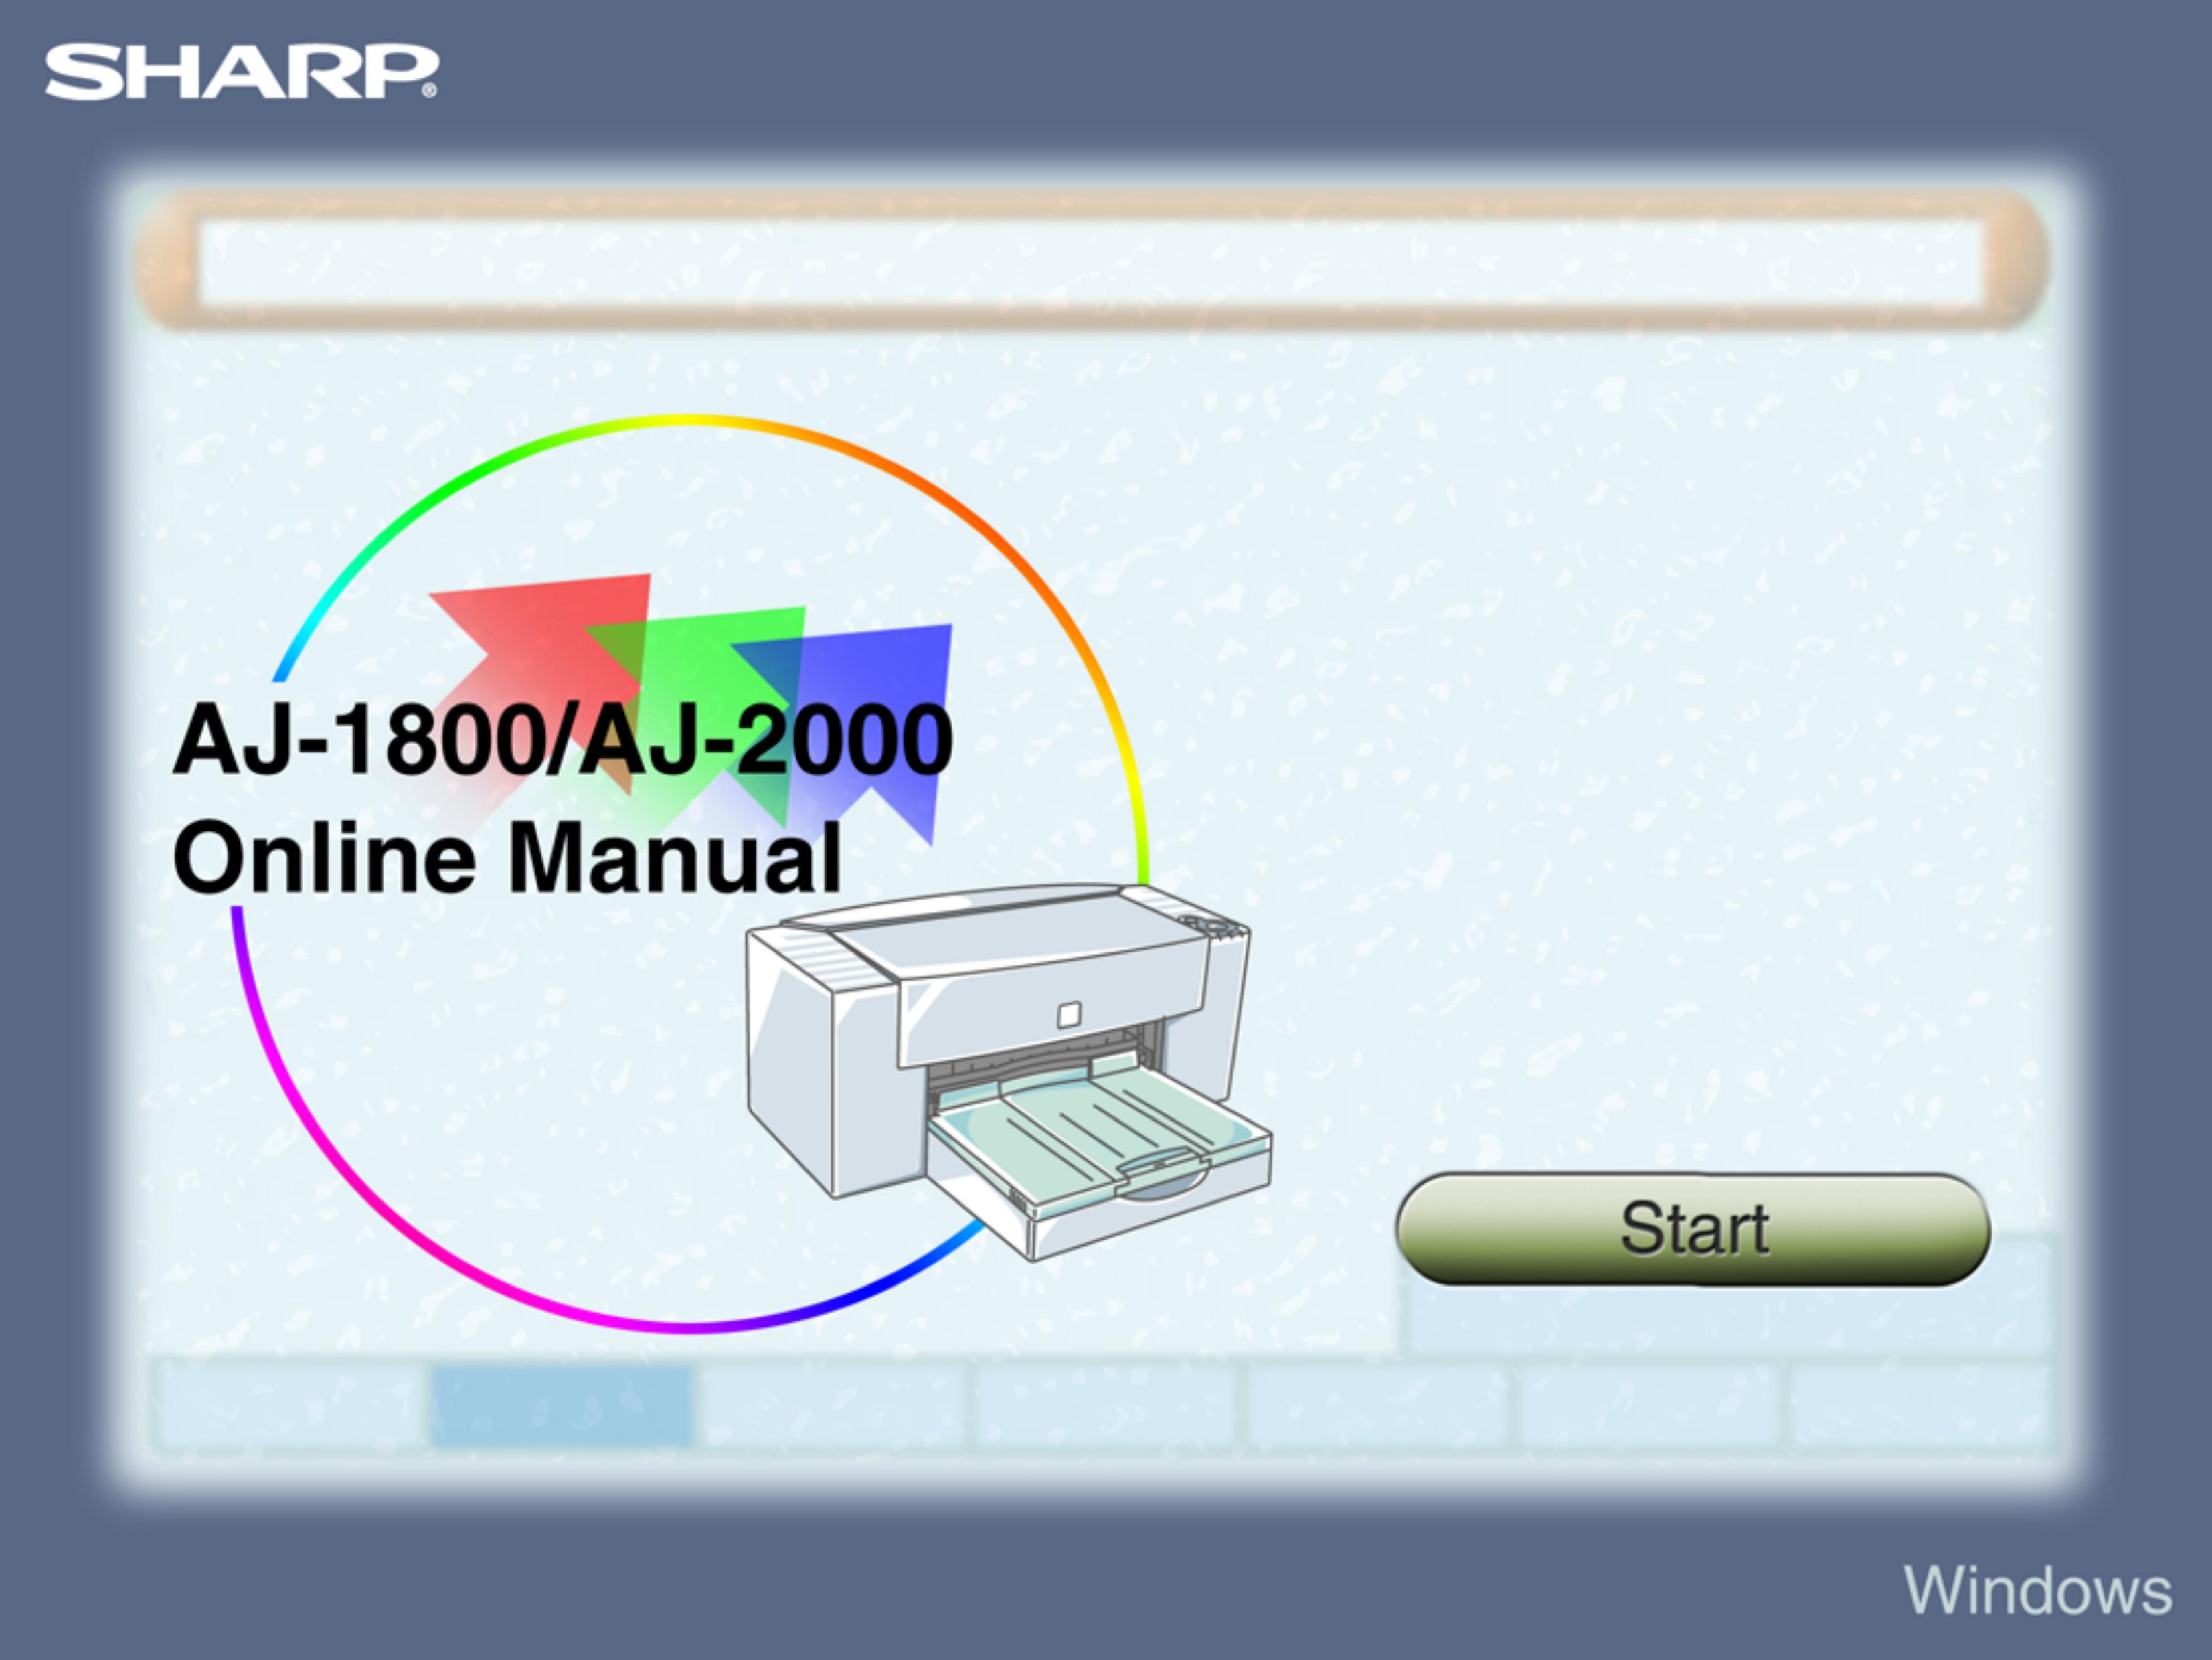 Sharp AJ-2000 Photo Printer User Manual